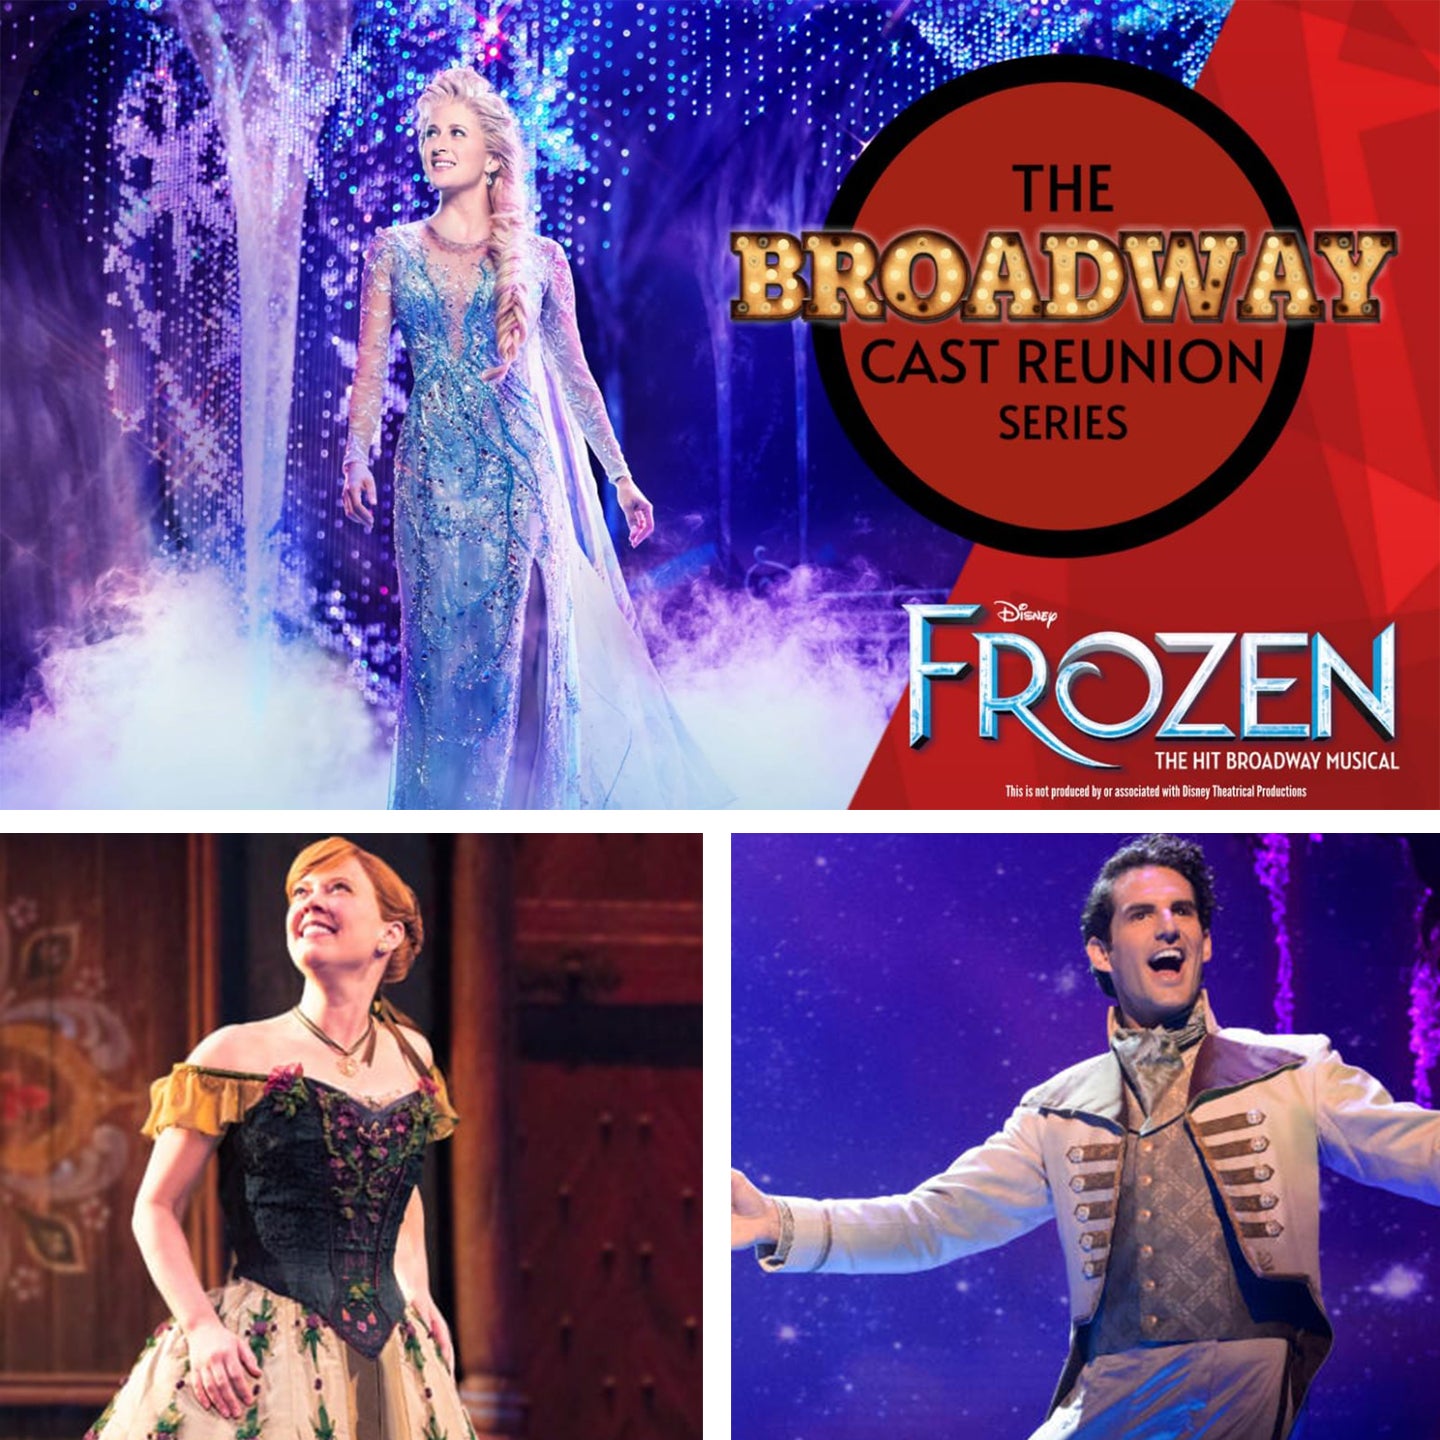 The Broadway Cast Reunion Series "Frozen" CarolinaTix